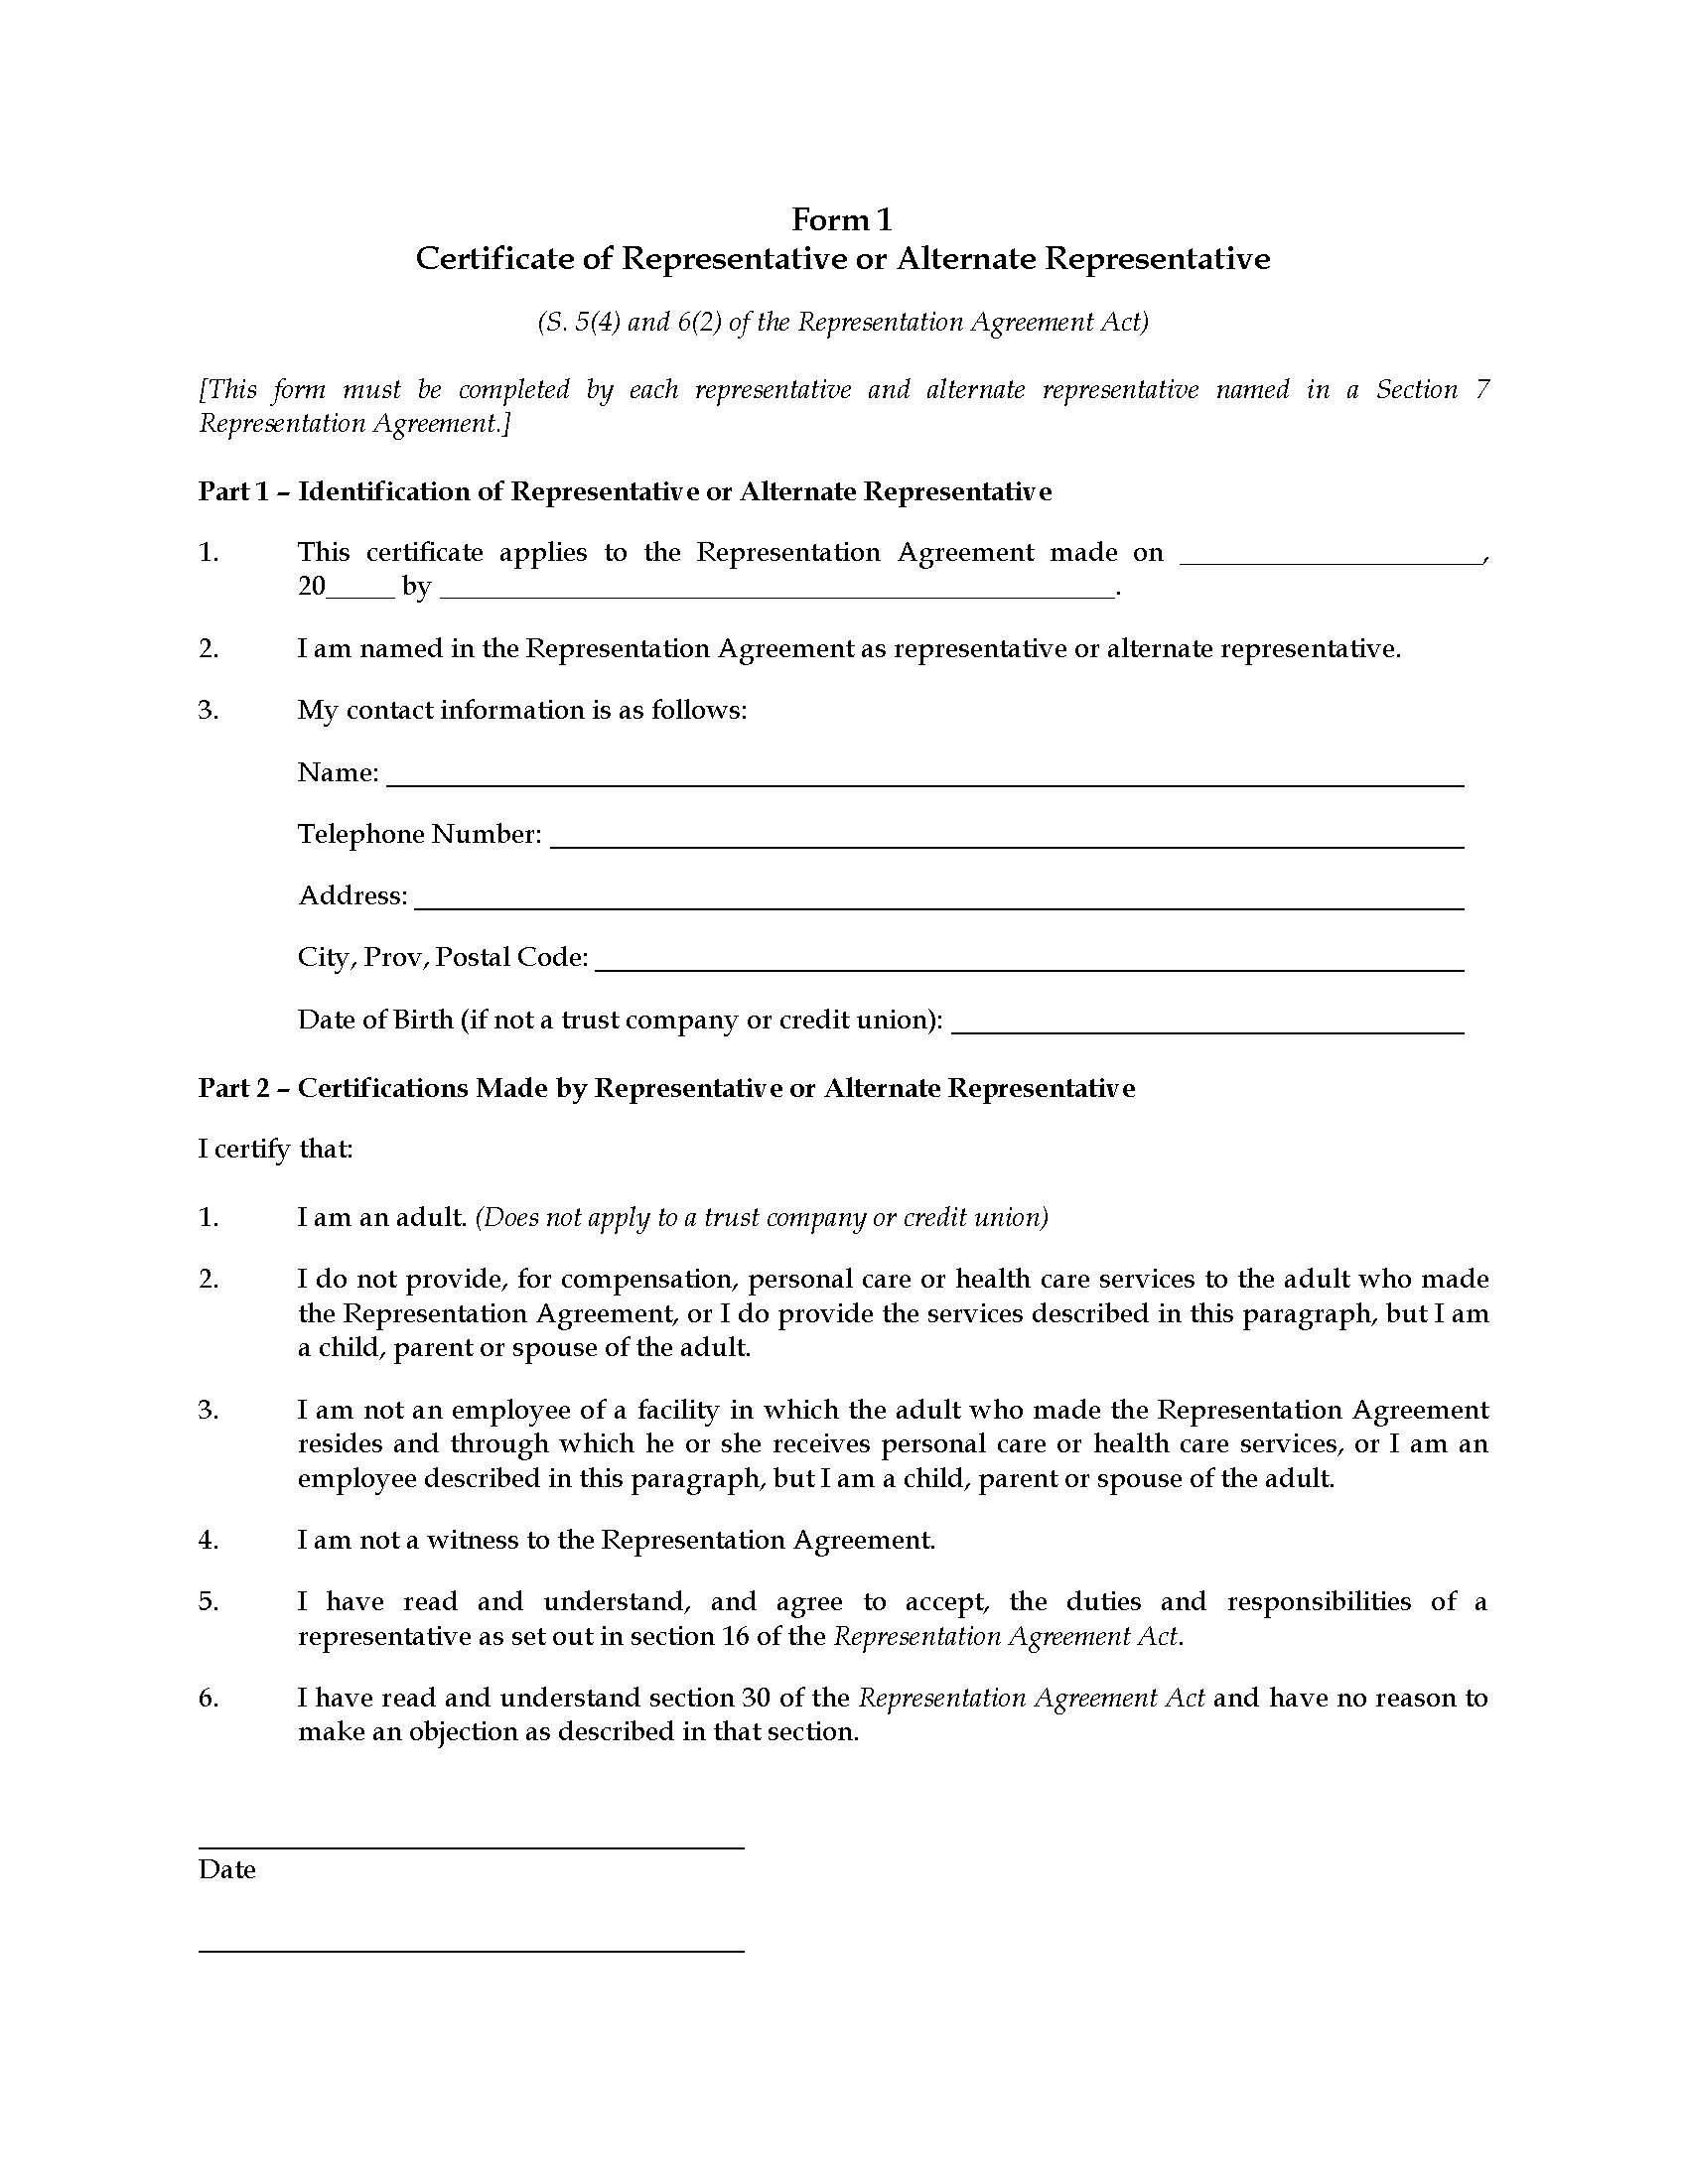 Company Representative Agreement British Columbia Form 1 Certificate Of Representative Legal Forms